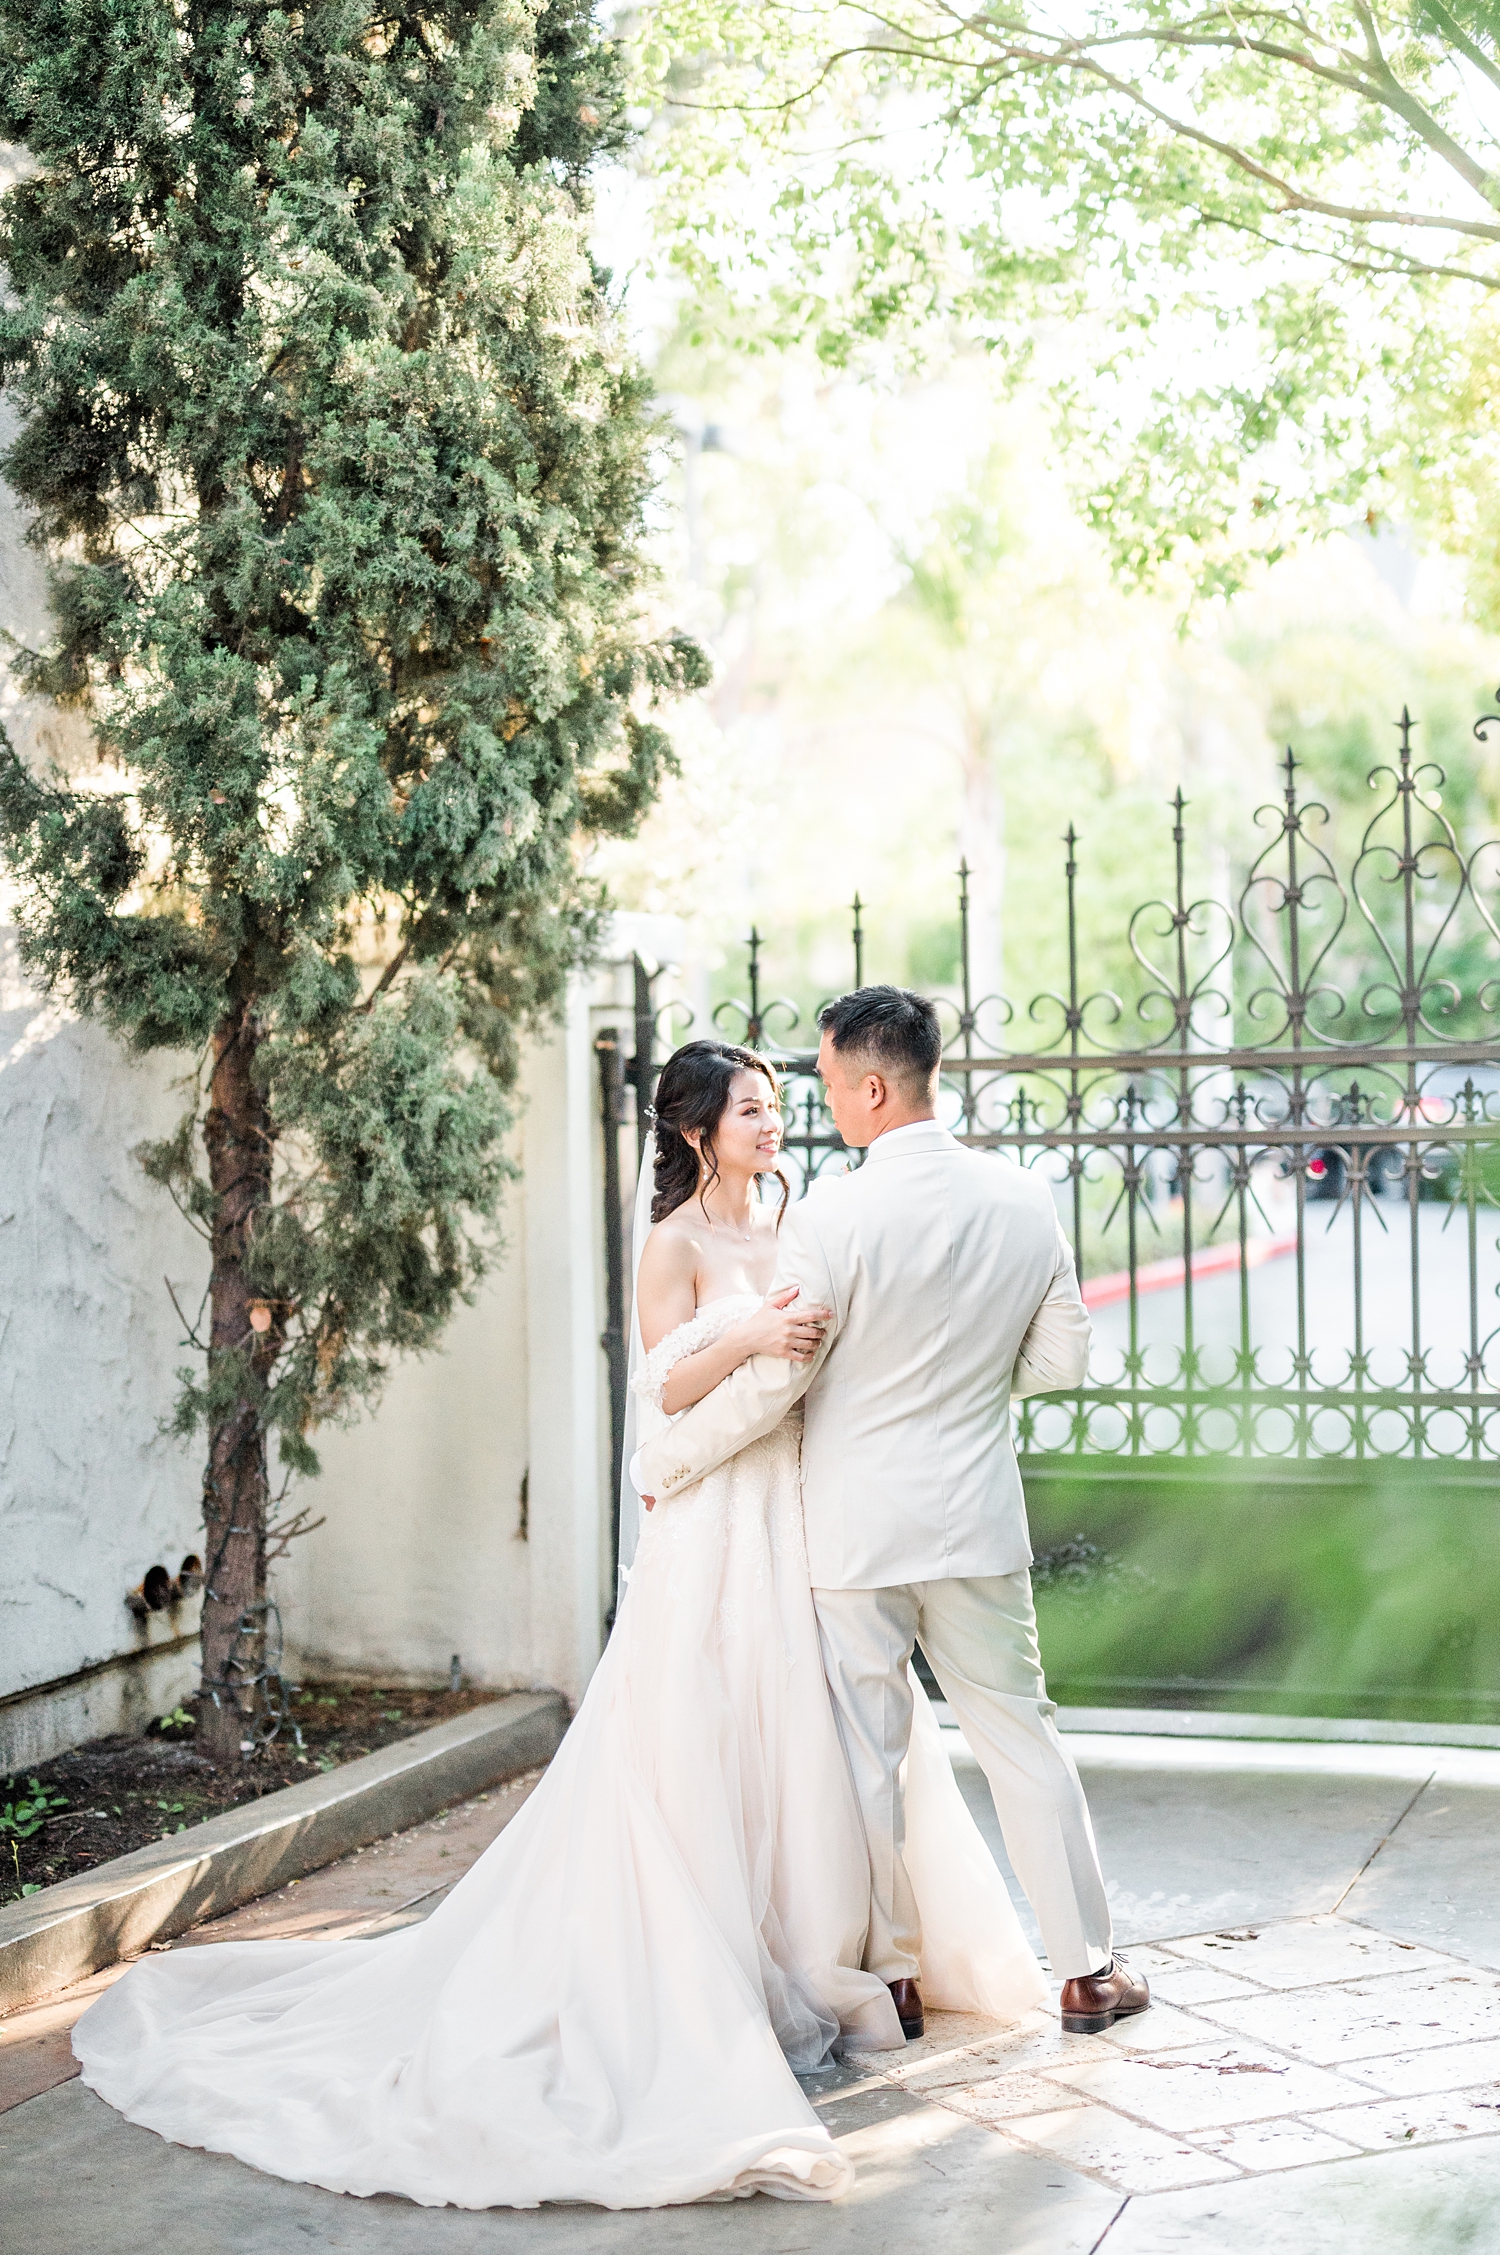 Chinese Tea Ceremony | Romantic Garden Wedding | OC Wedding Photographer | The Villa Westminster-103| Nataly Hernandez Photography | Diana + Byron.jpg